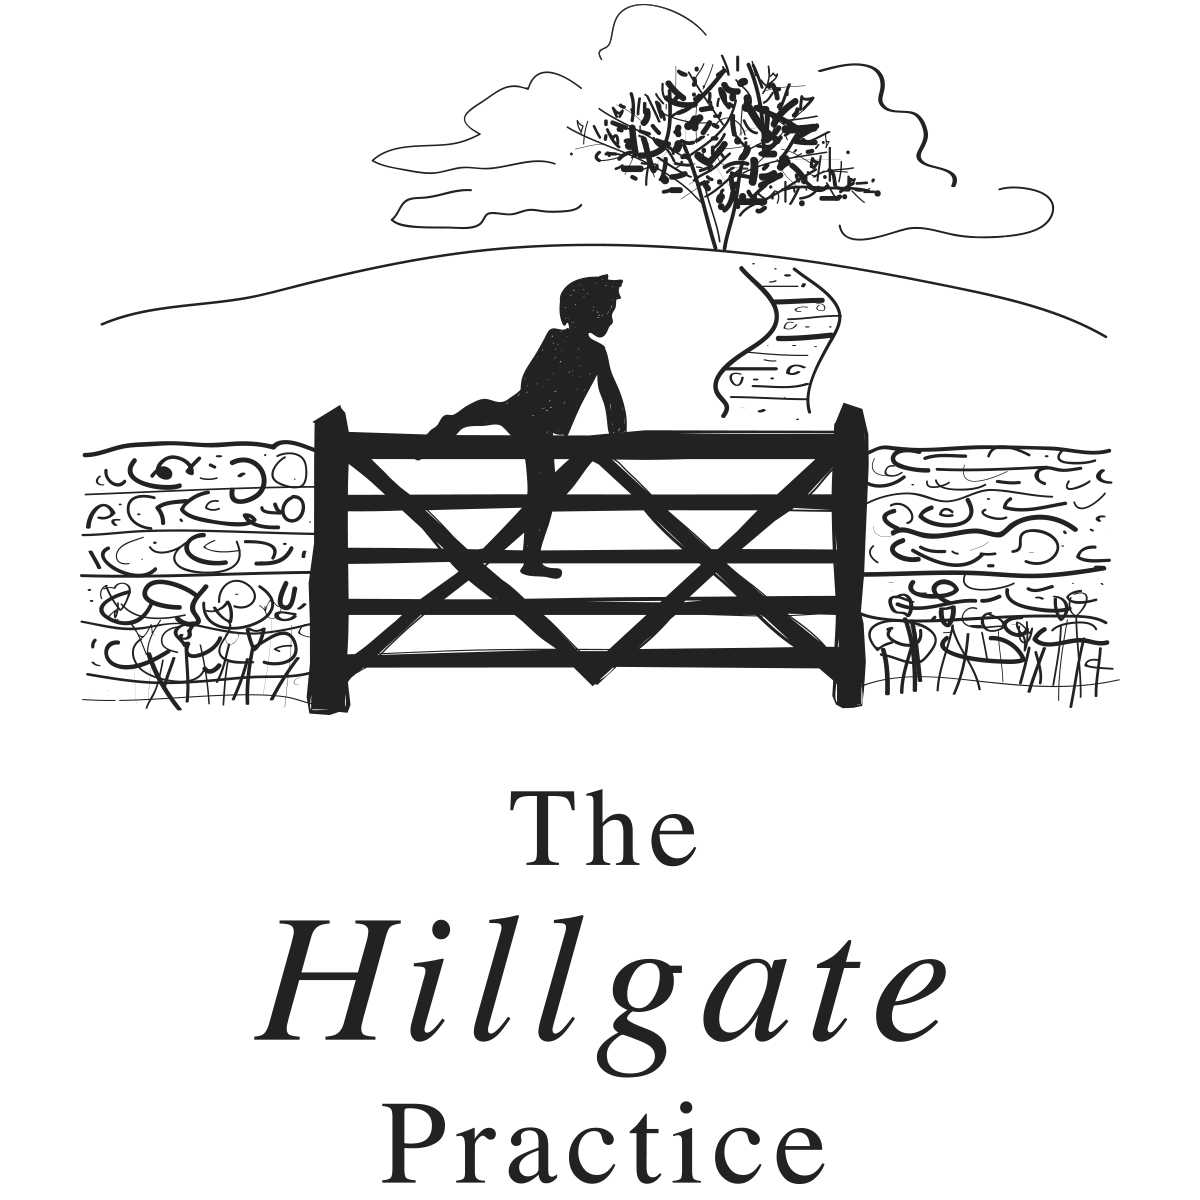 The Hillgate Practice